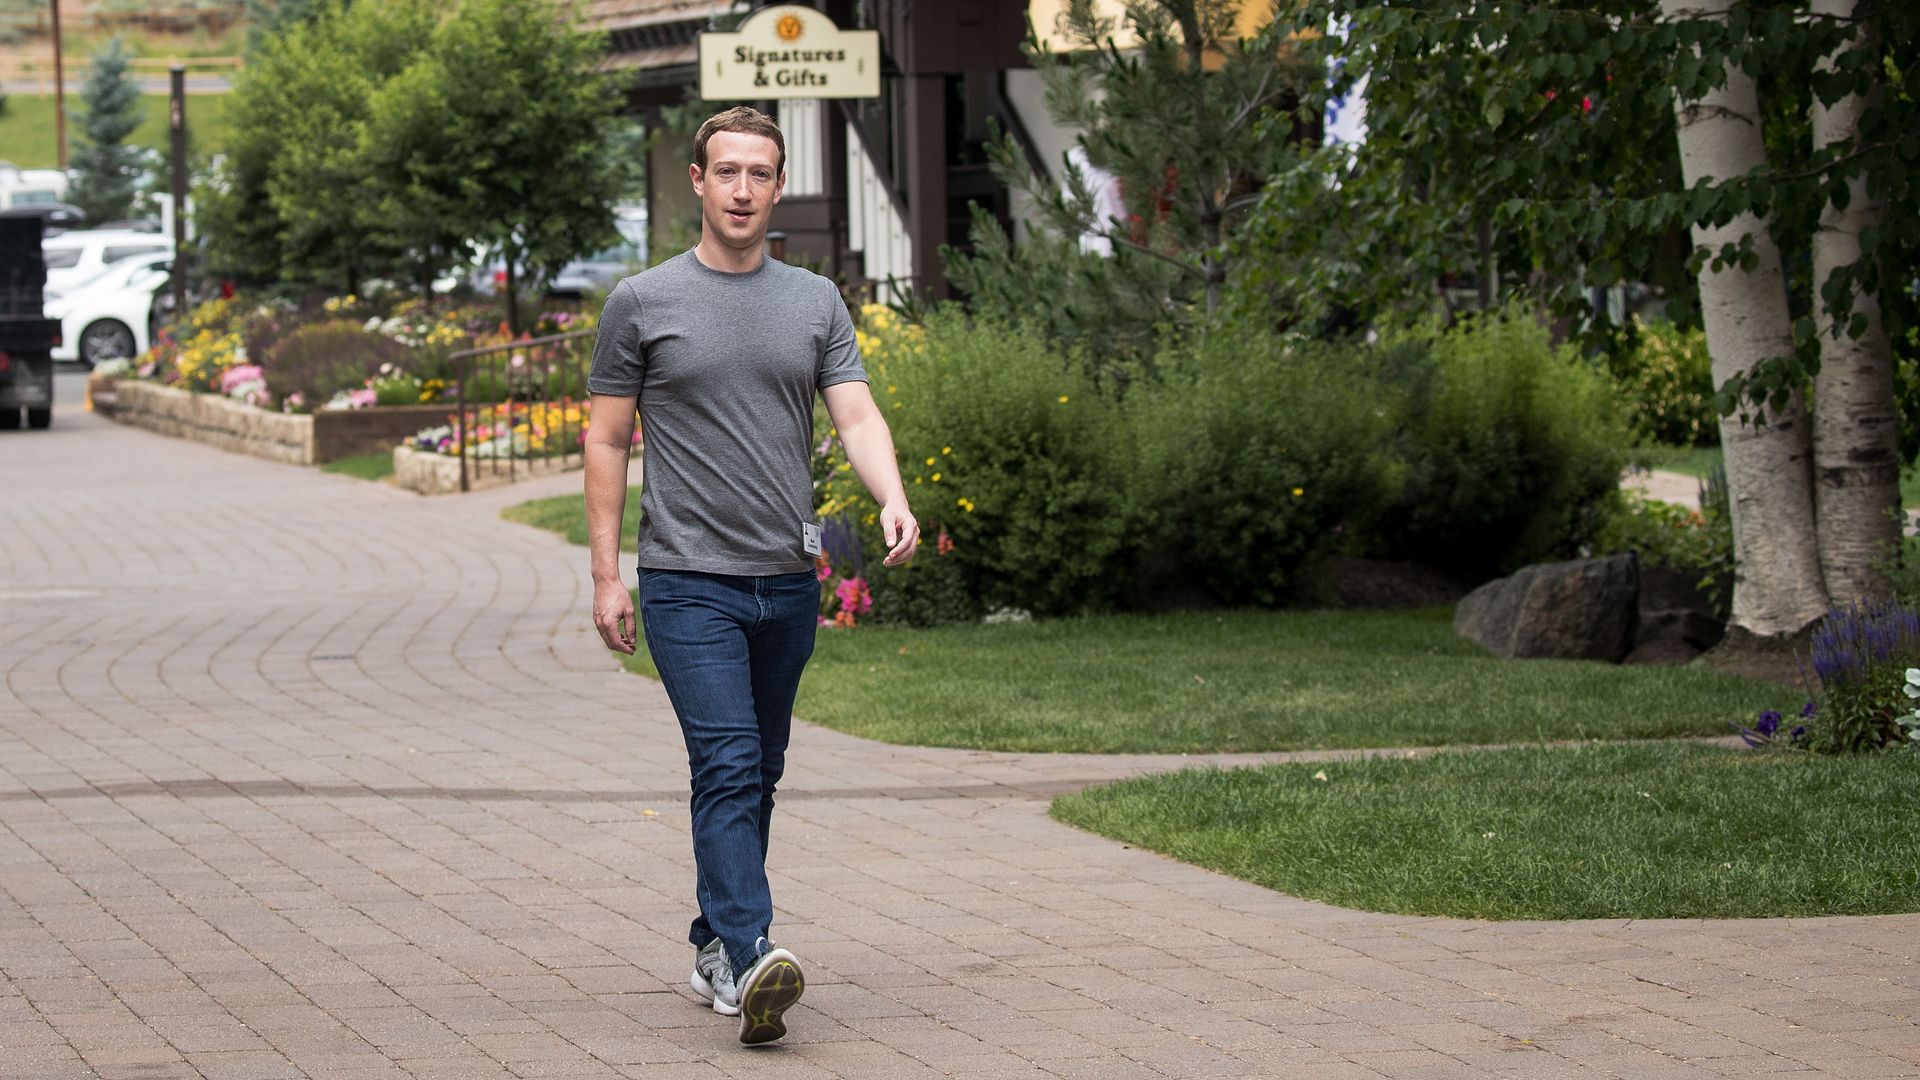 Mark Zuckerberg walks through a town